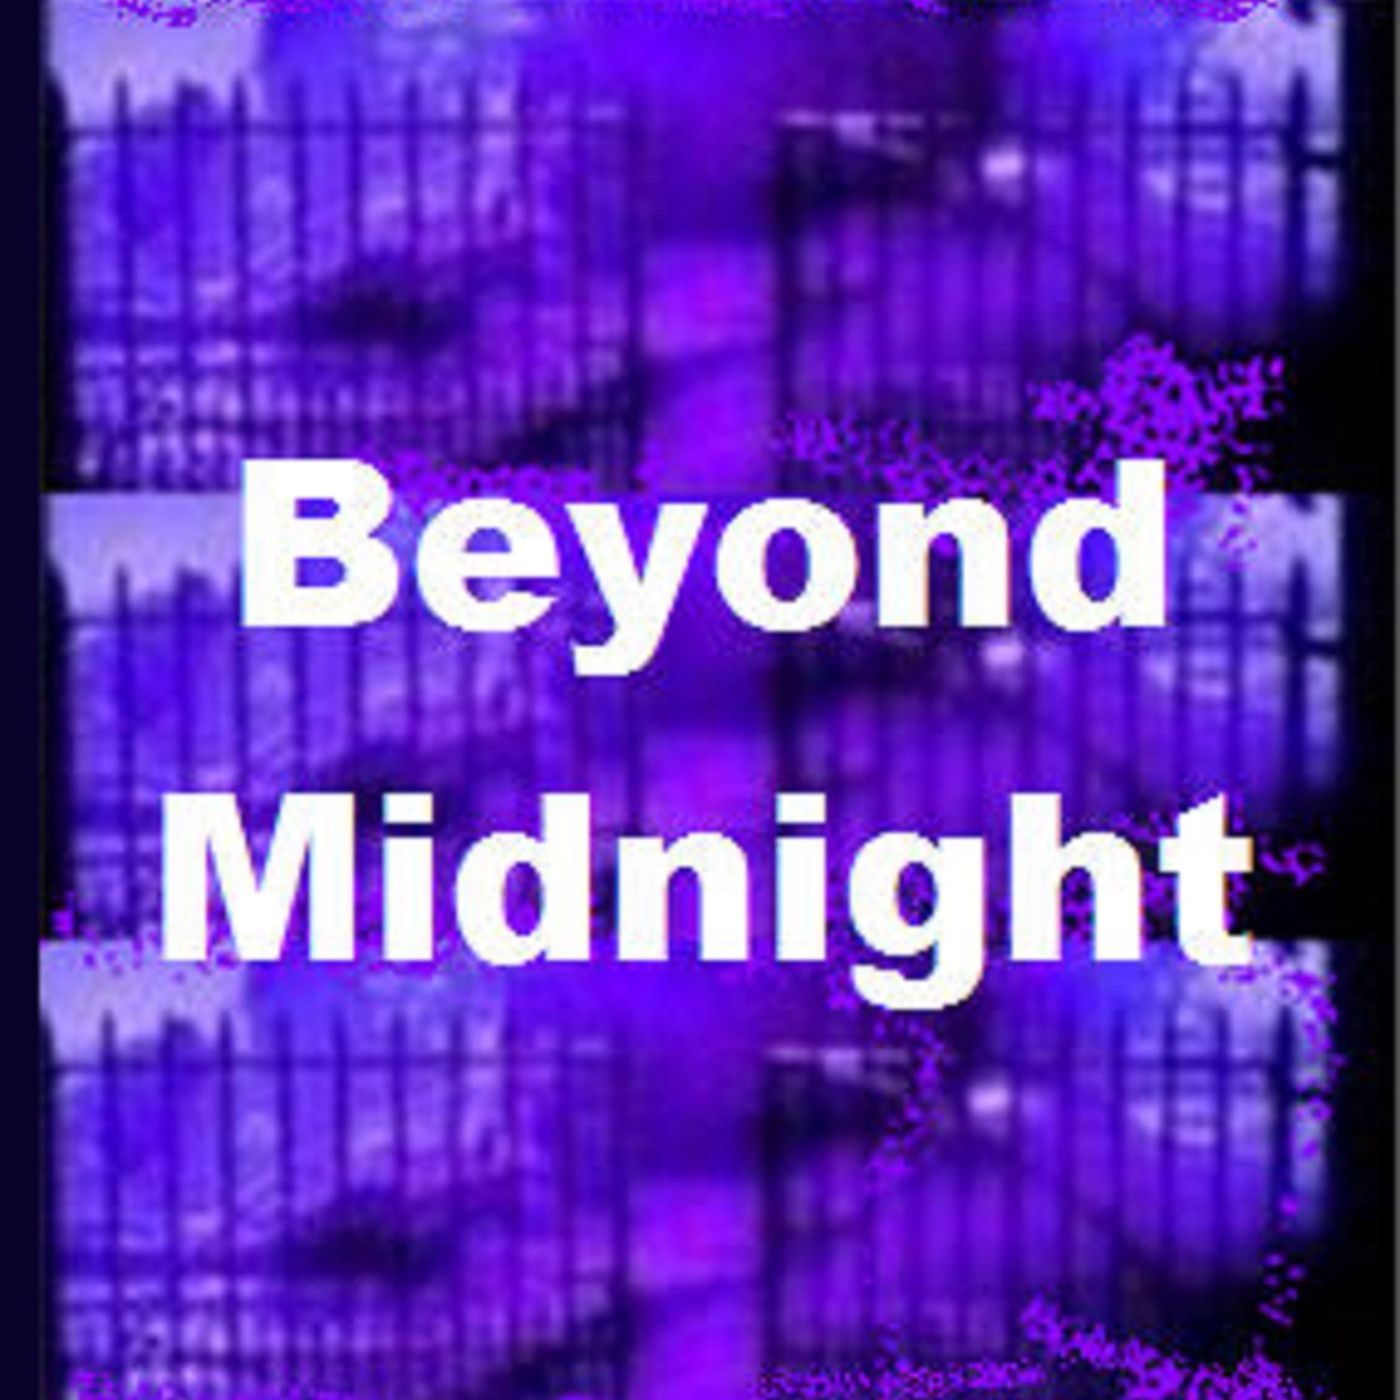 Beyond Midnight xx-xx-xx (xx) My Daddy Had No Gun